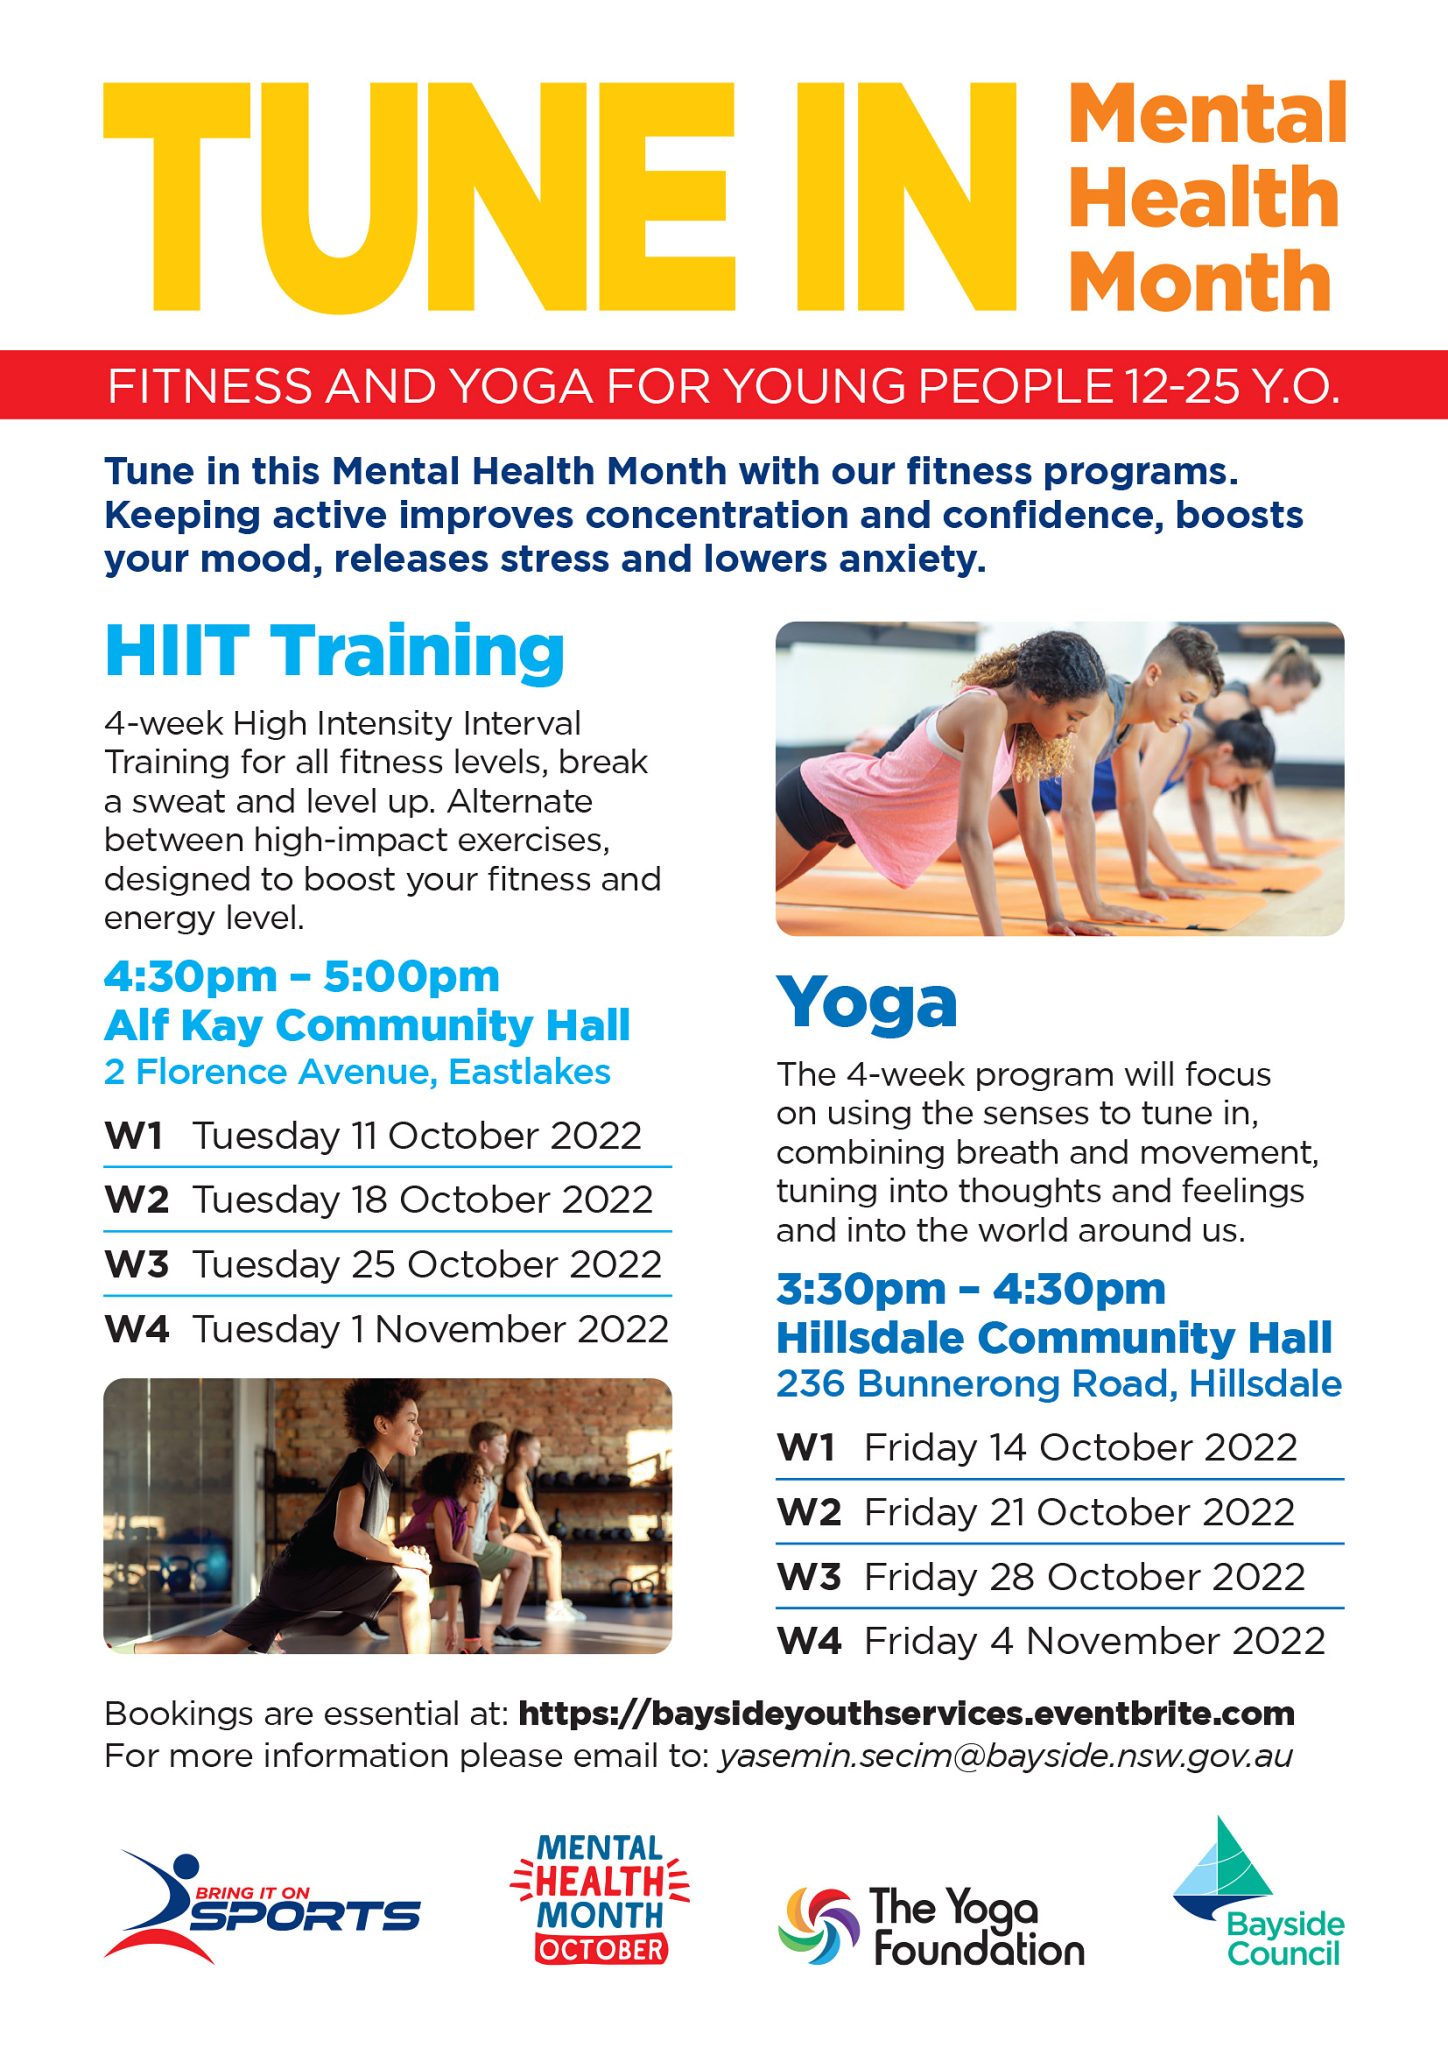 Yoga and Hiit training